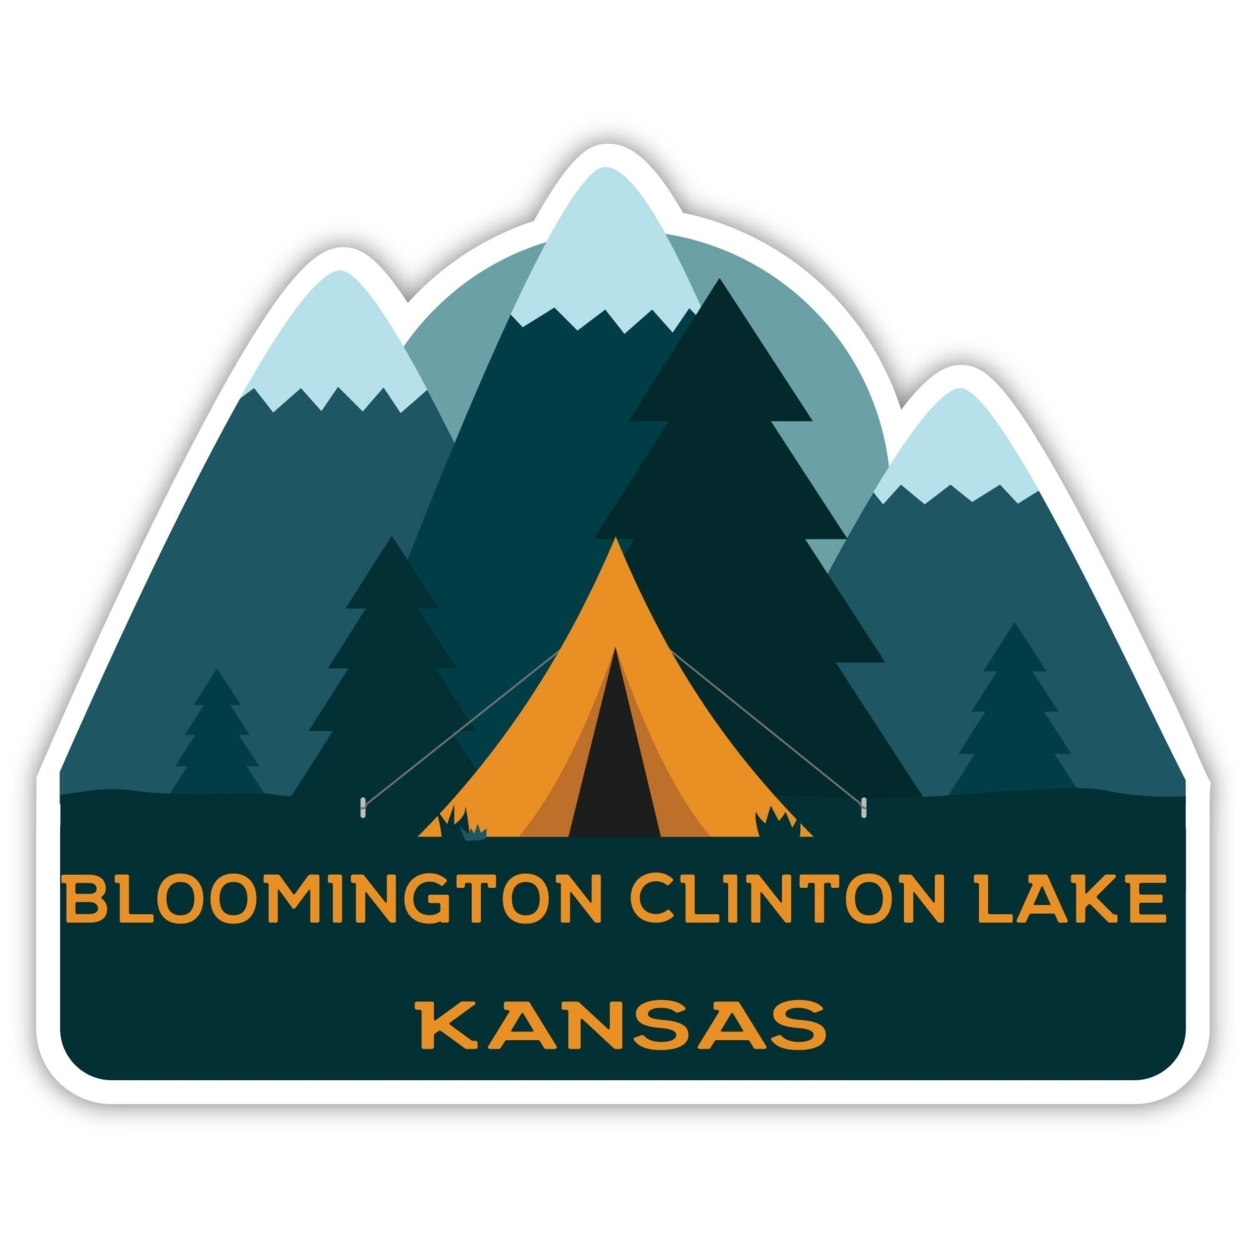 Bloomington Clinton Lake Kansas Souvenir Decorative Stickers (Choose Theme And Size) - 4-Pack, 4-Inch, Tent